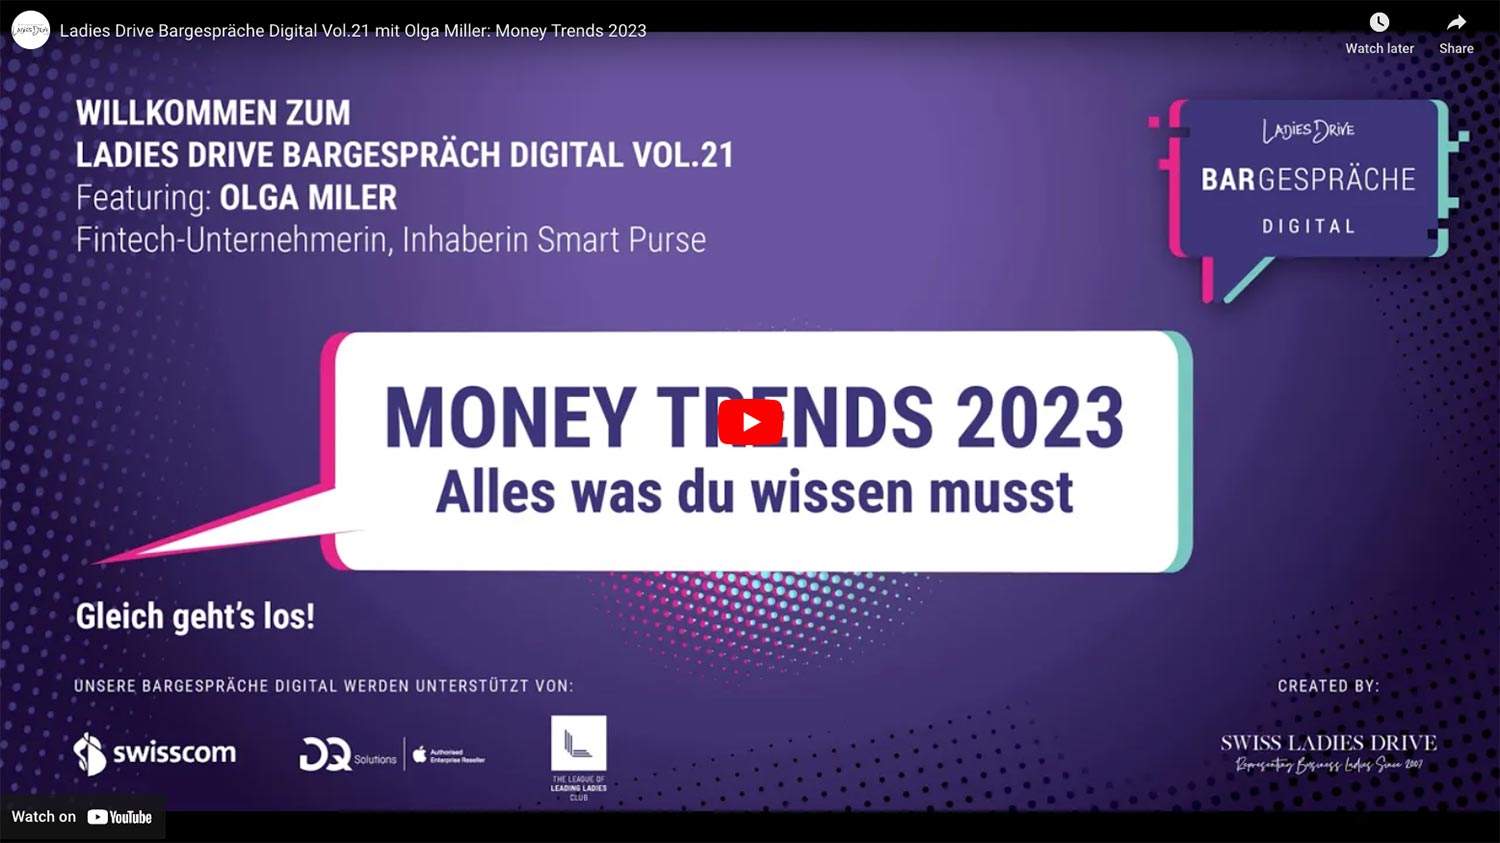 VIDEO – Bargespräche Digital Vol.21 mit Olga Miller: Money Trends 2023